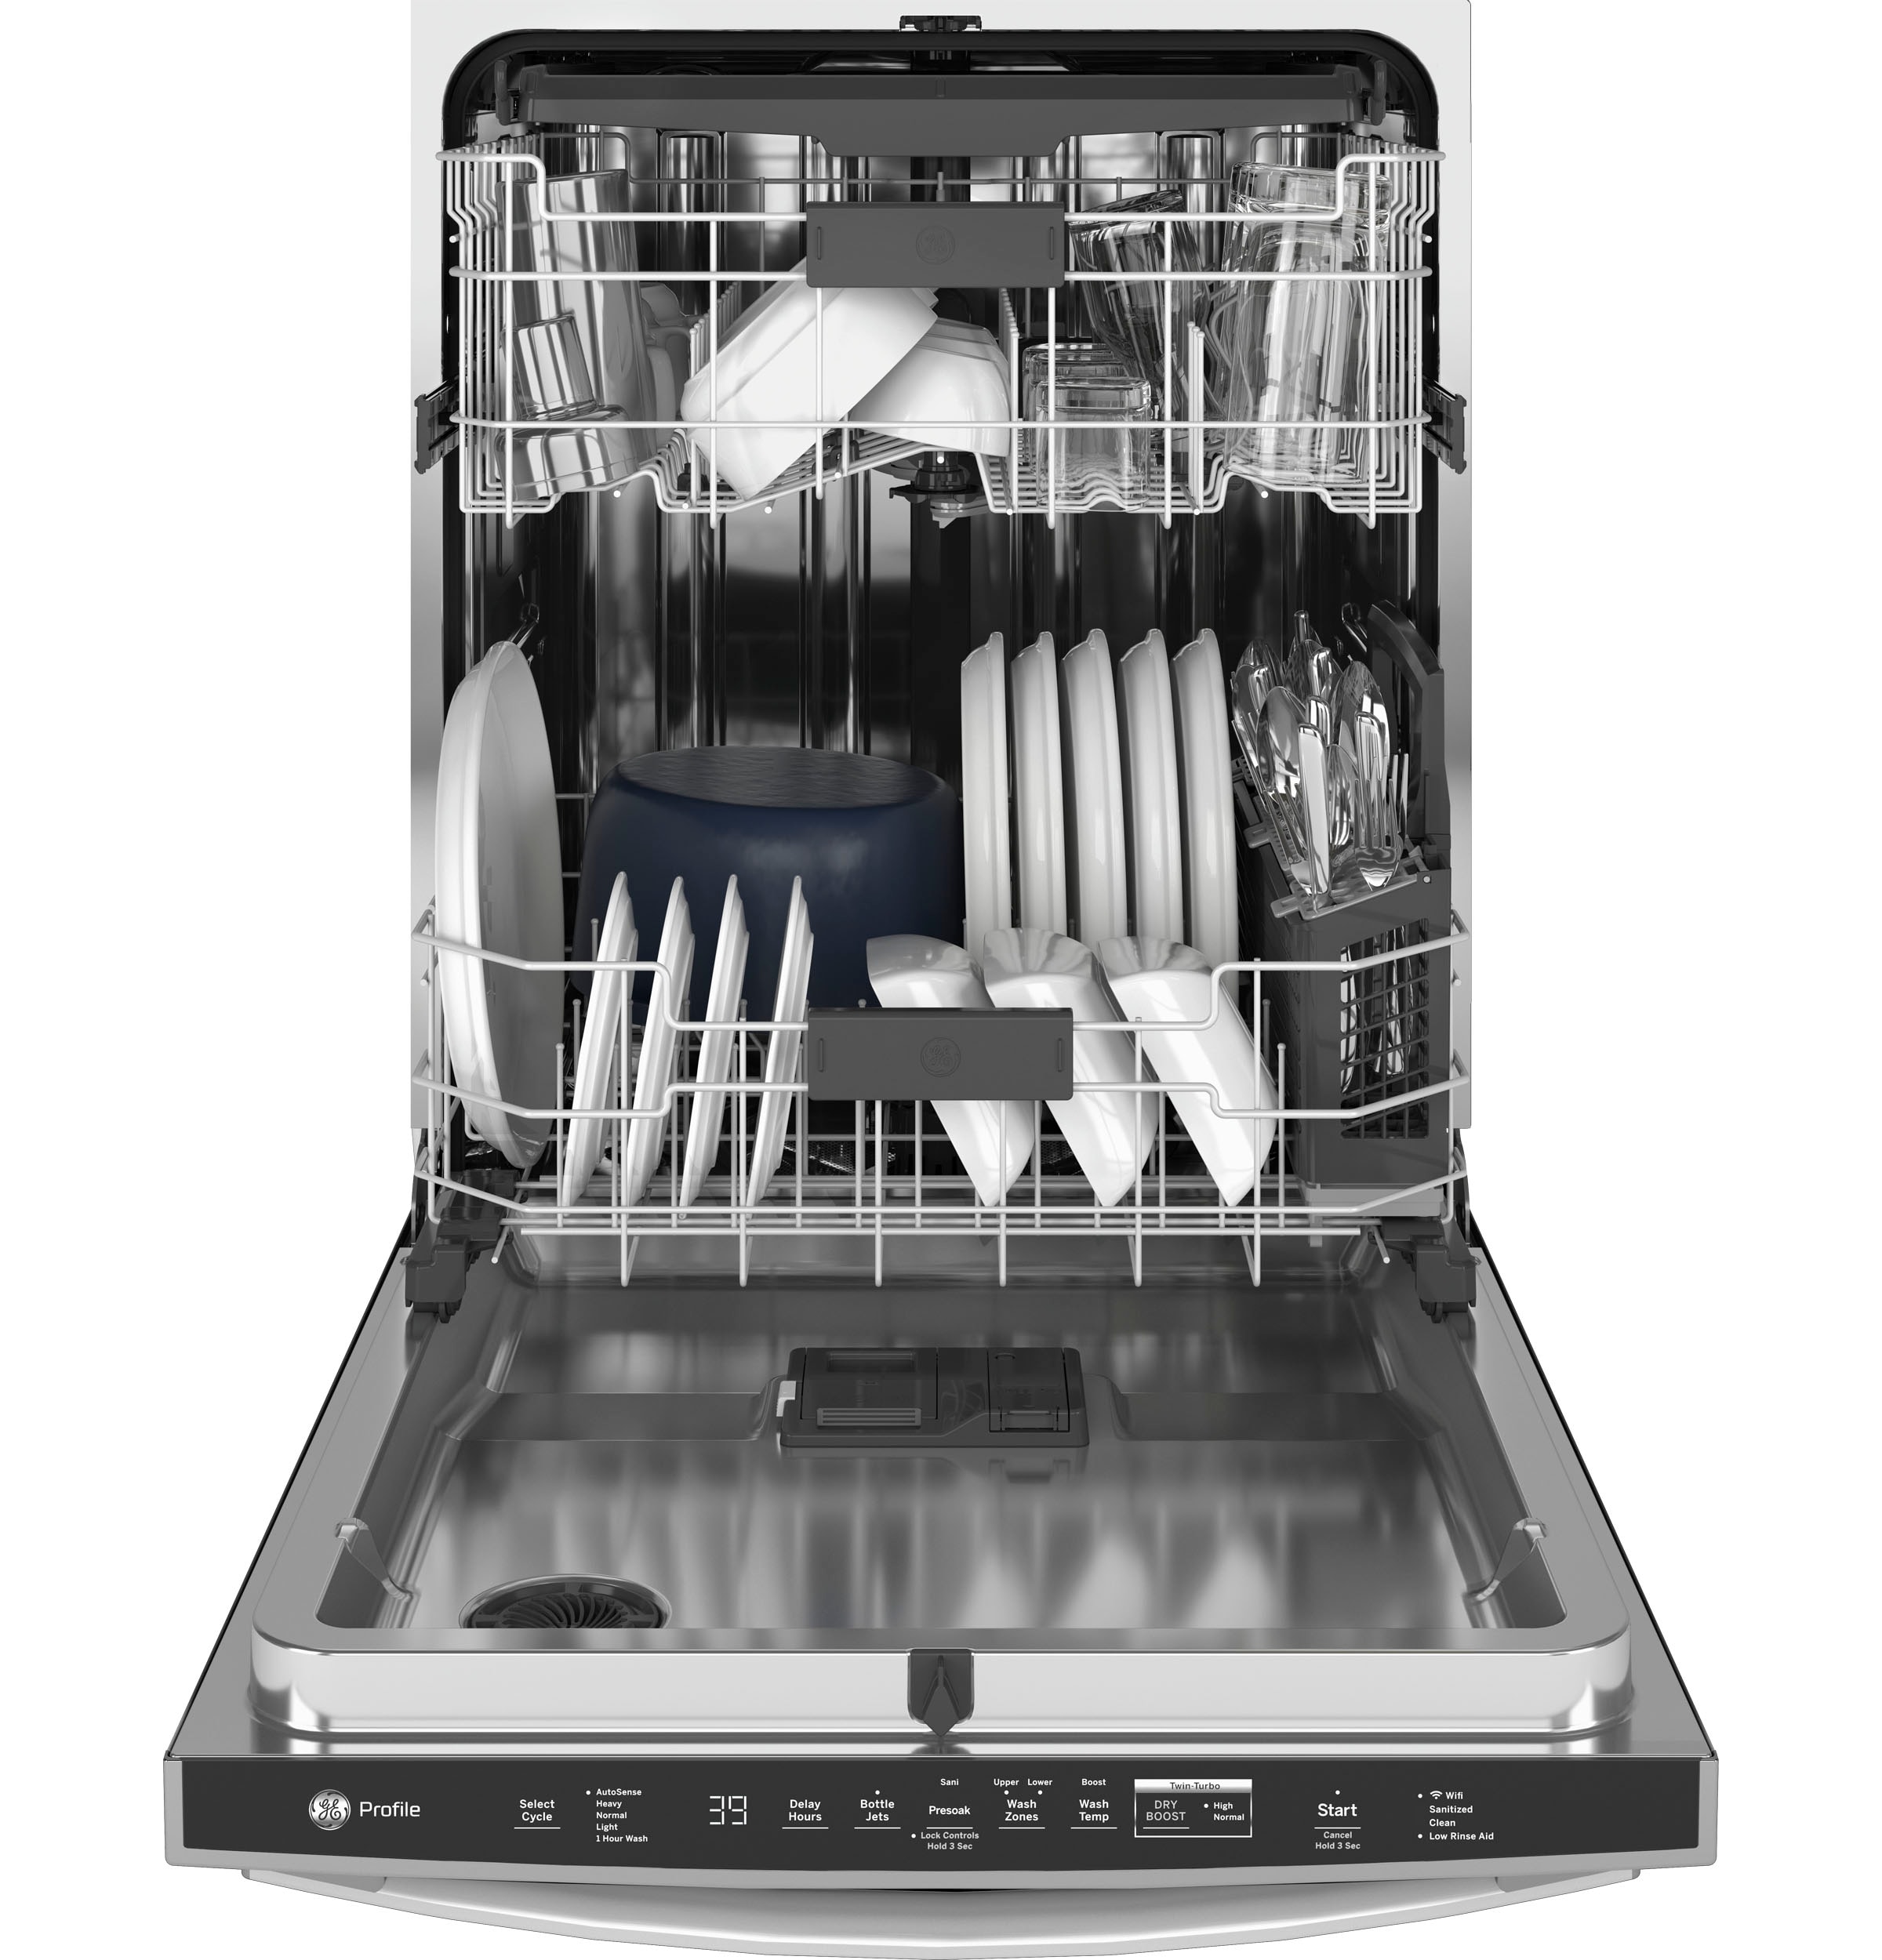 Is Stainless Steel Dishwasher Safe? - Kool8